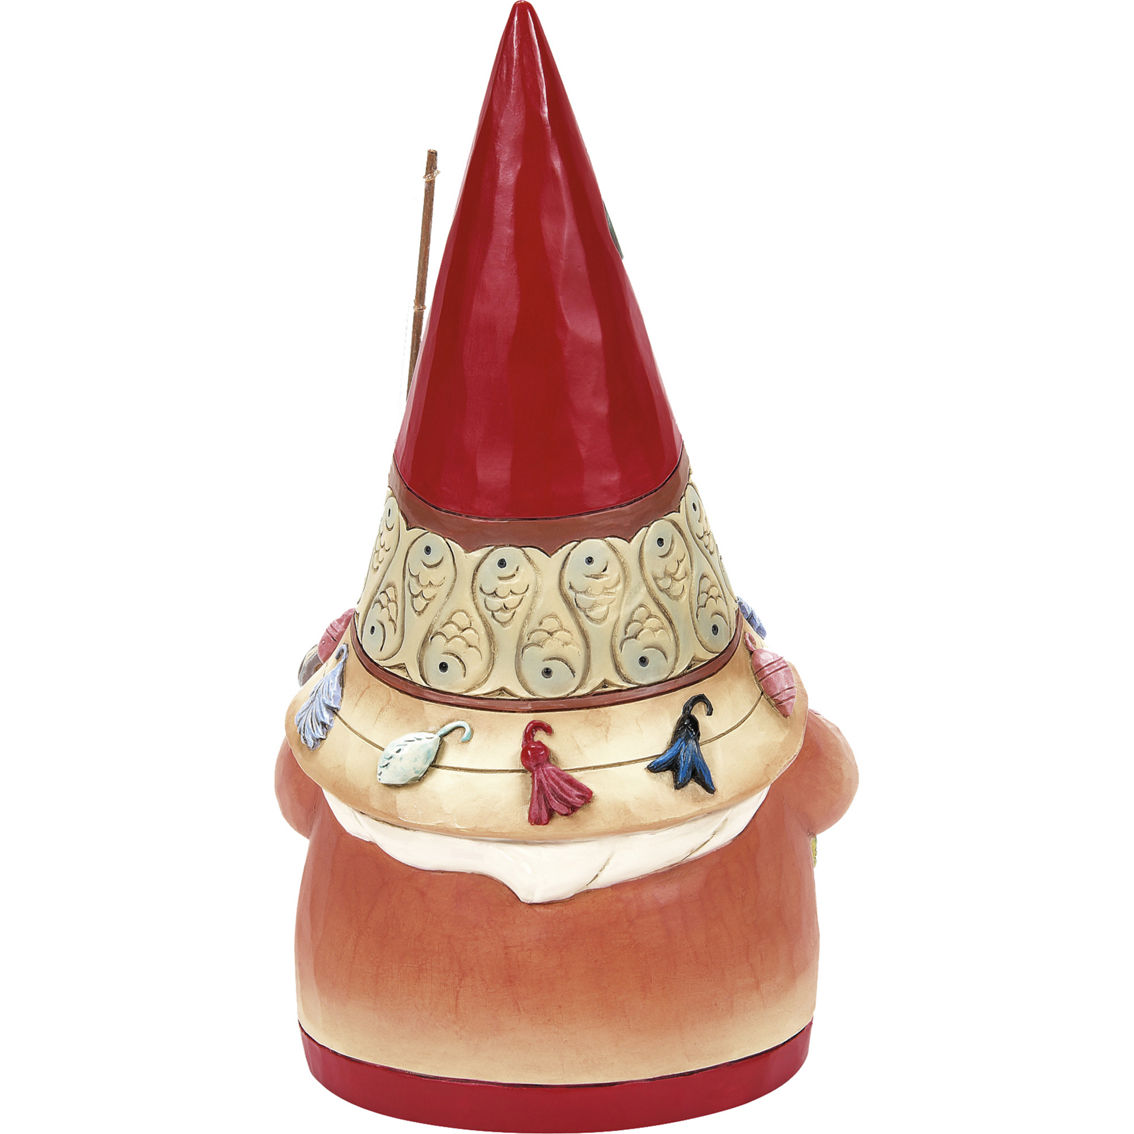 Jim Shore Fishing Gnome Figurine - Image 2 of 2